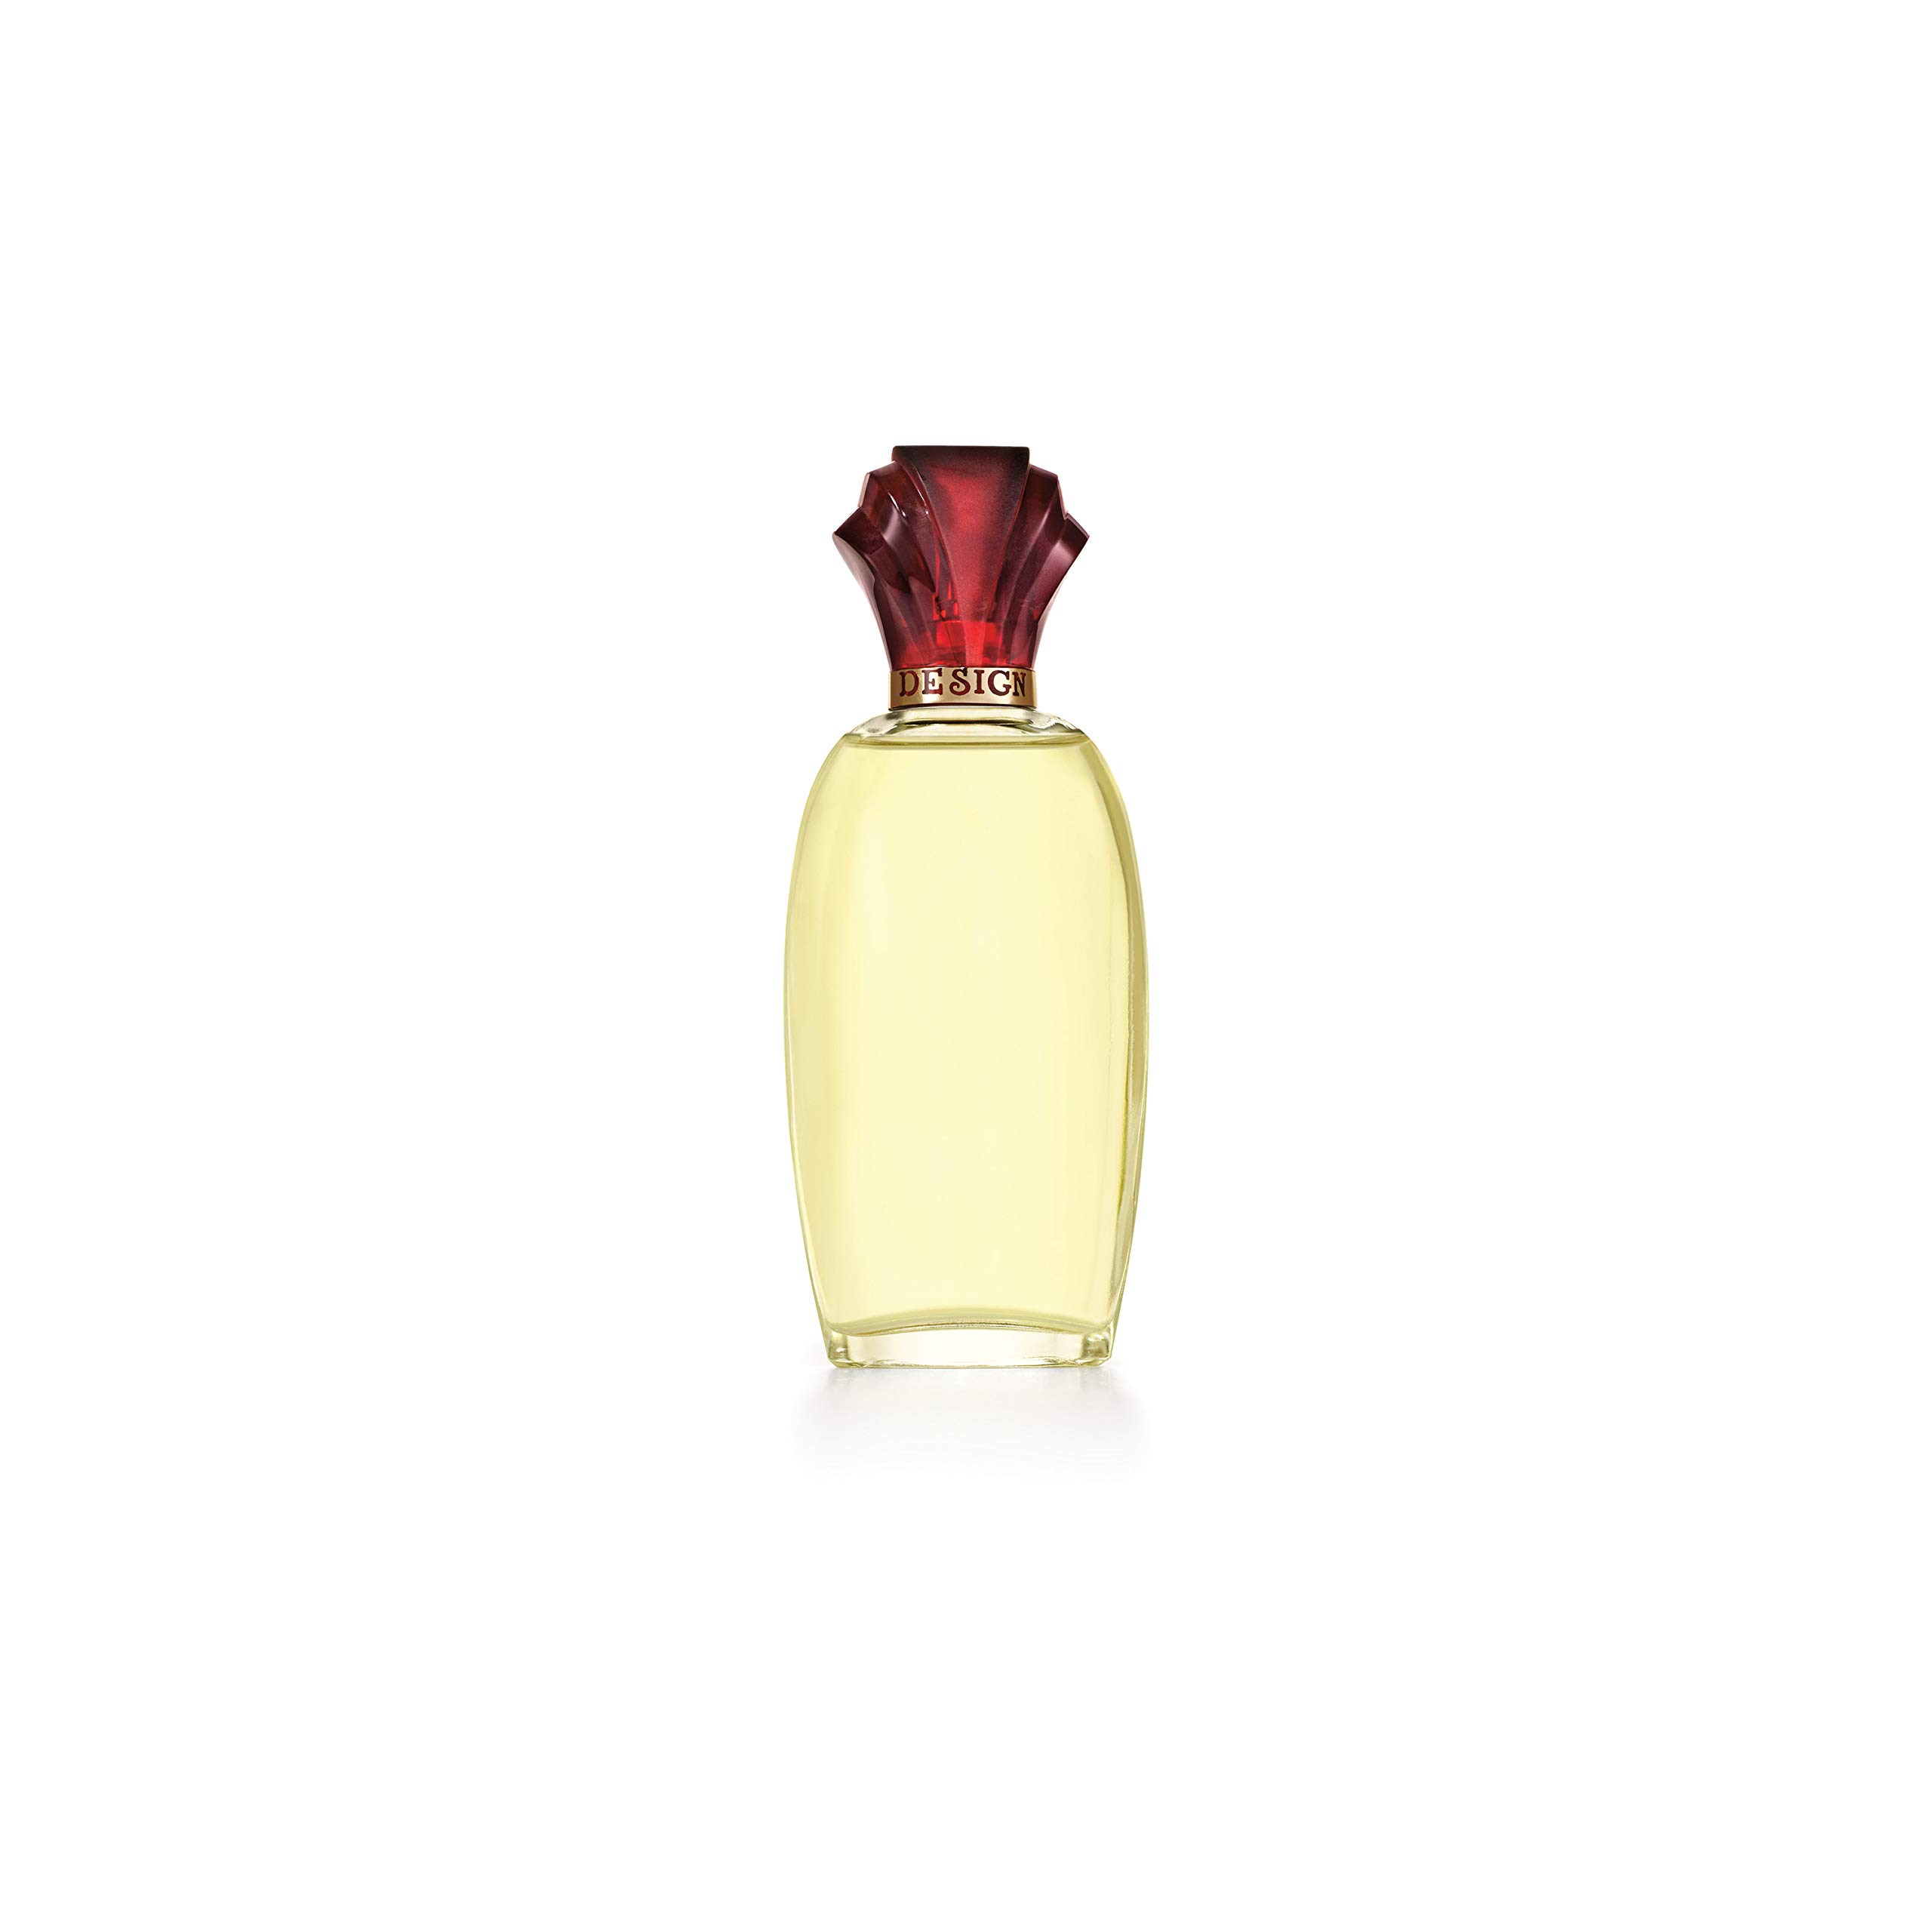 Paul Sebastian Women's Perfume, Day or Night Soft Floral Scent, DESIGN, 3.4 Fl Oz